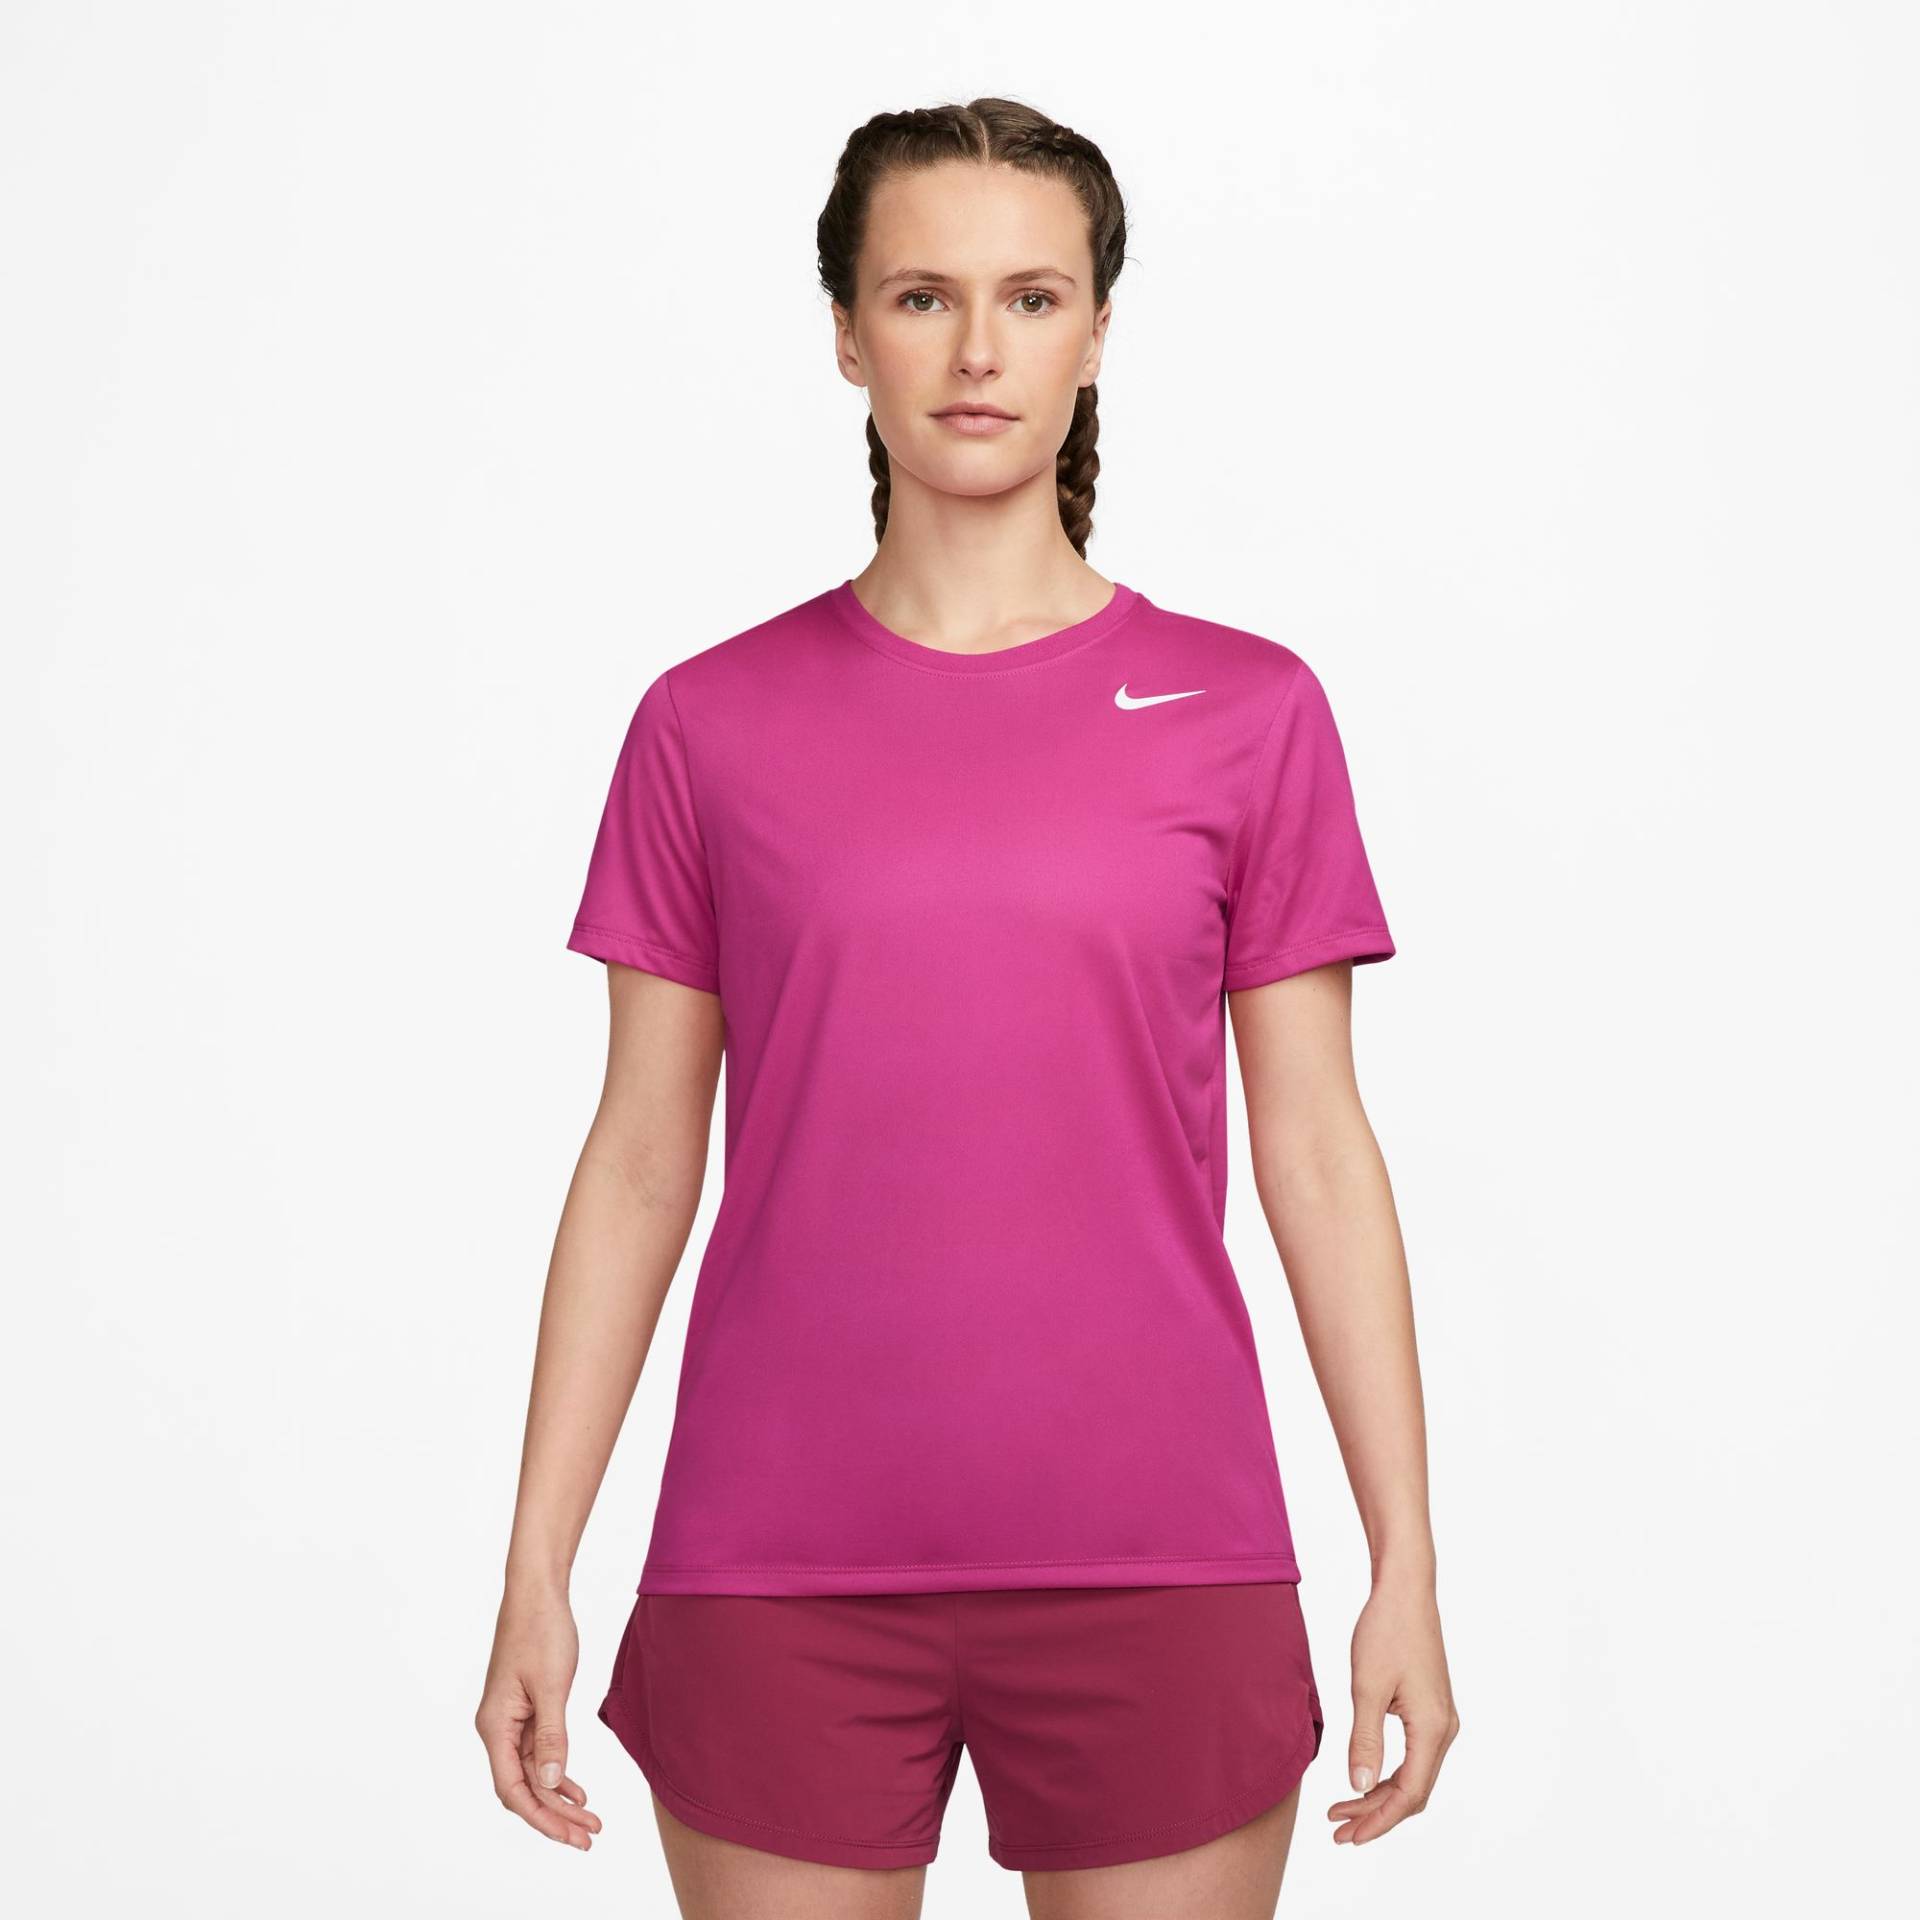 Nike Trainingsshirt »DRI-FIT WOMEN'S T-SHIRT« von Nike